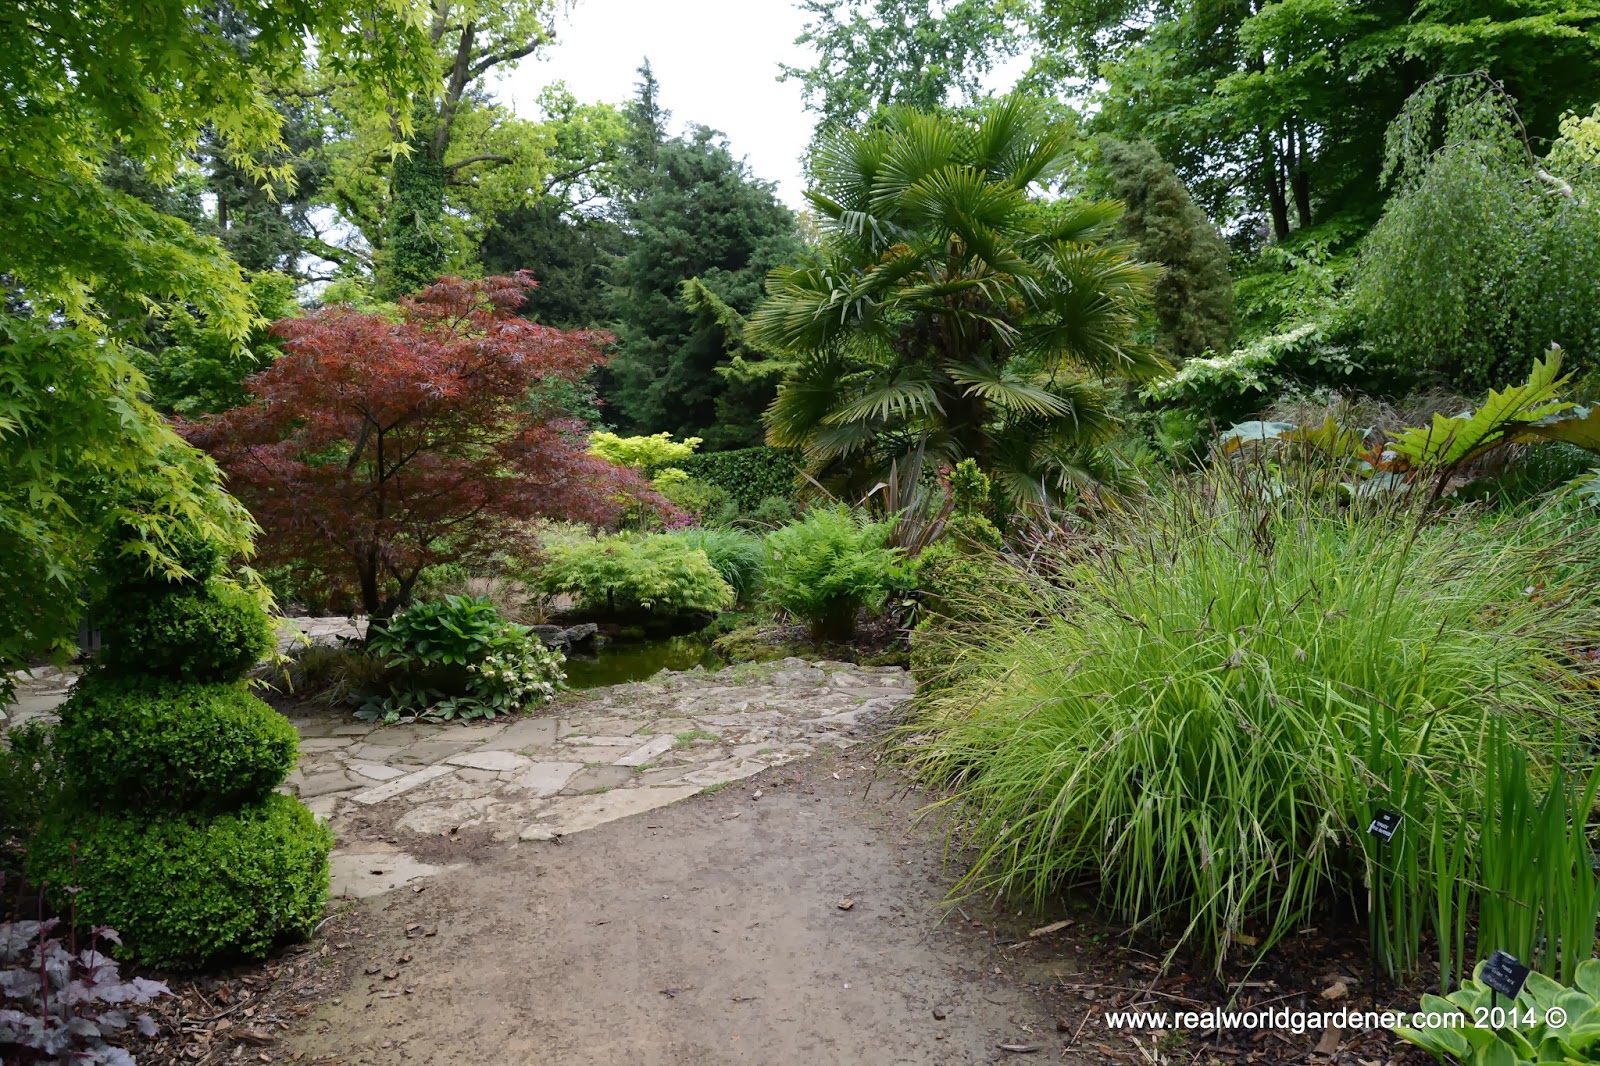 Real World Gardener Texture and Foliage in Green Garden Design